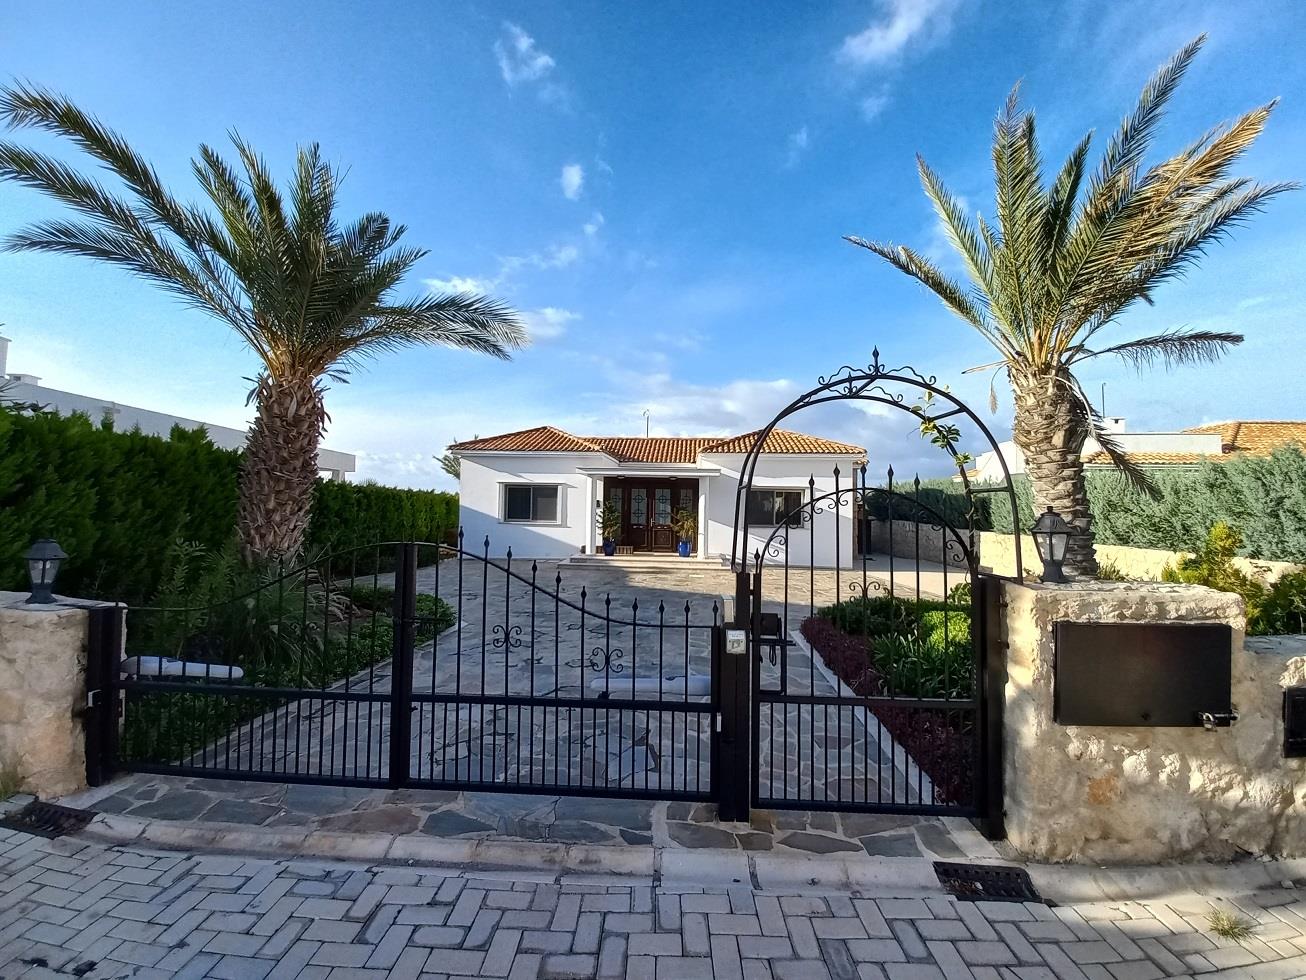 4 bed villa to rent, Esentepe - Property Image 1